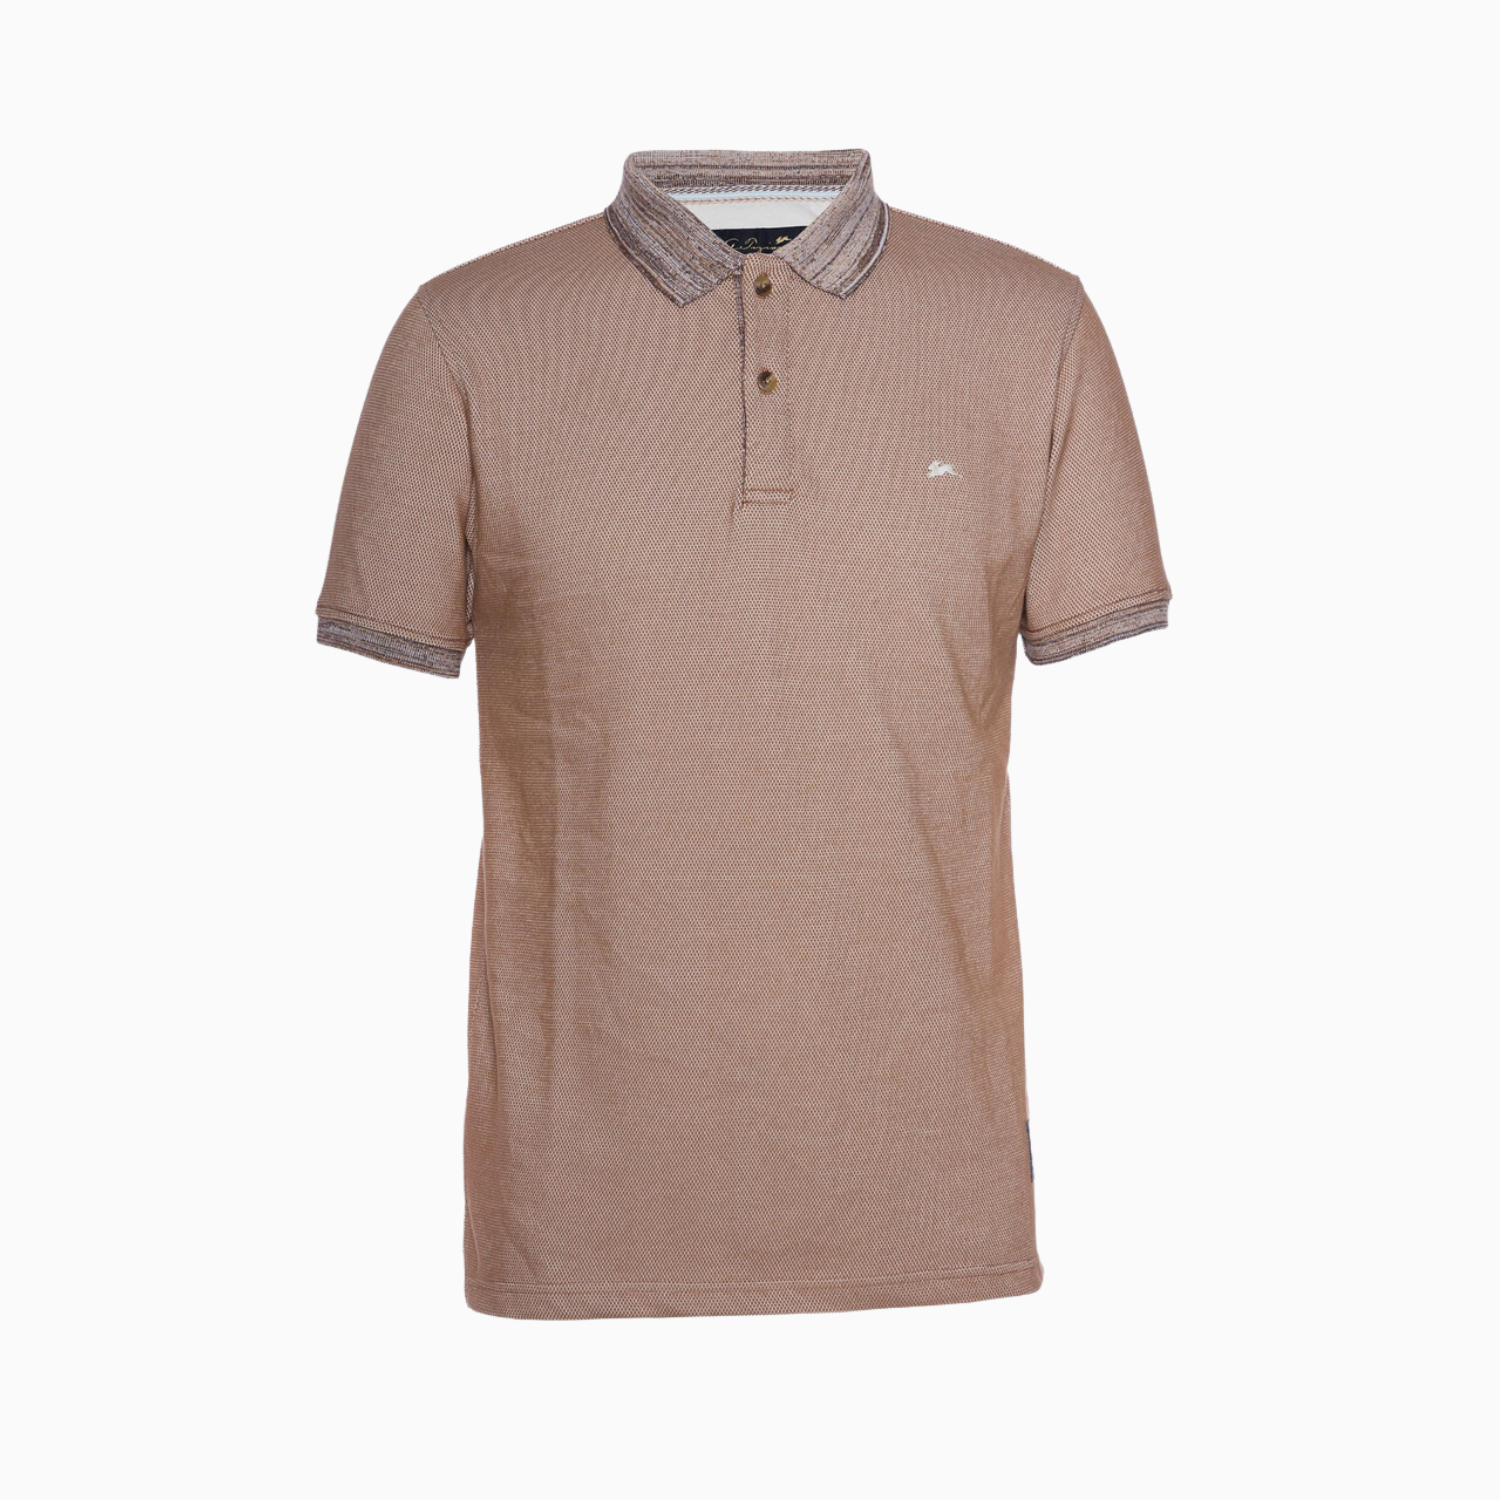 a-tiziano-mens-finn-short-sleeve-polo-shirt-32atm4206-camel